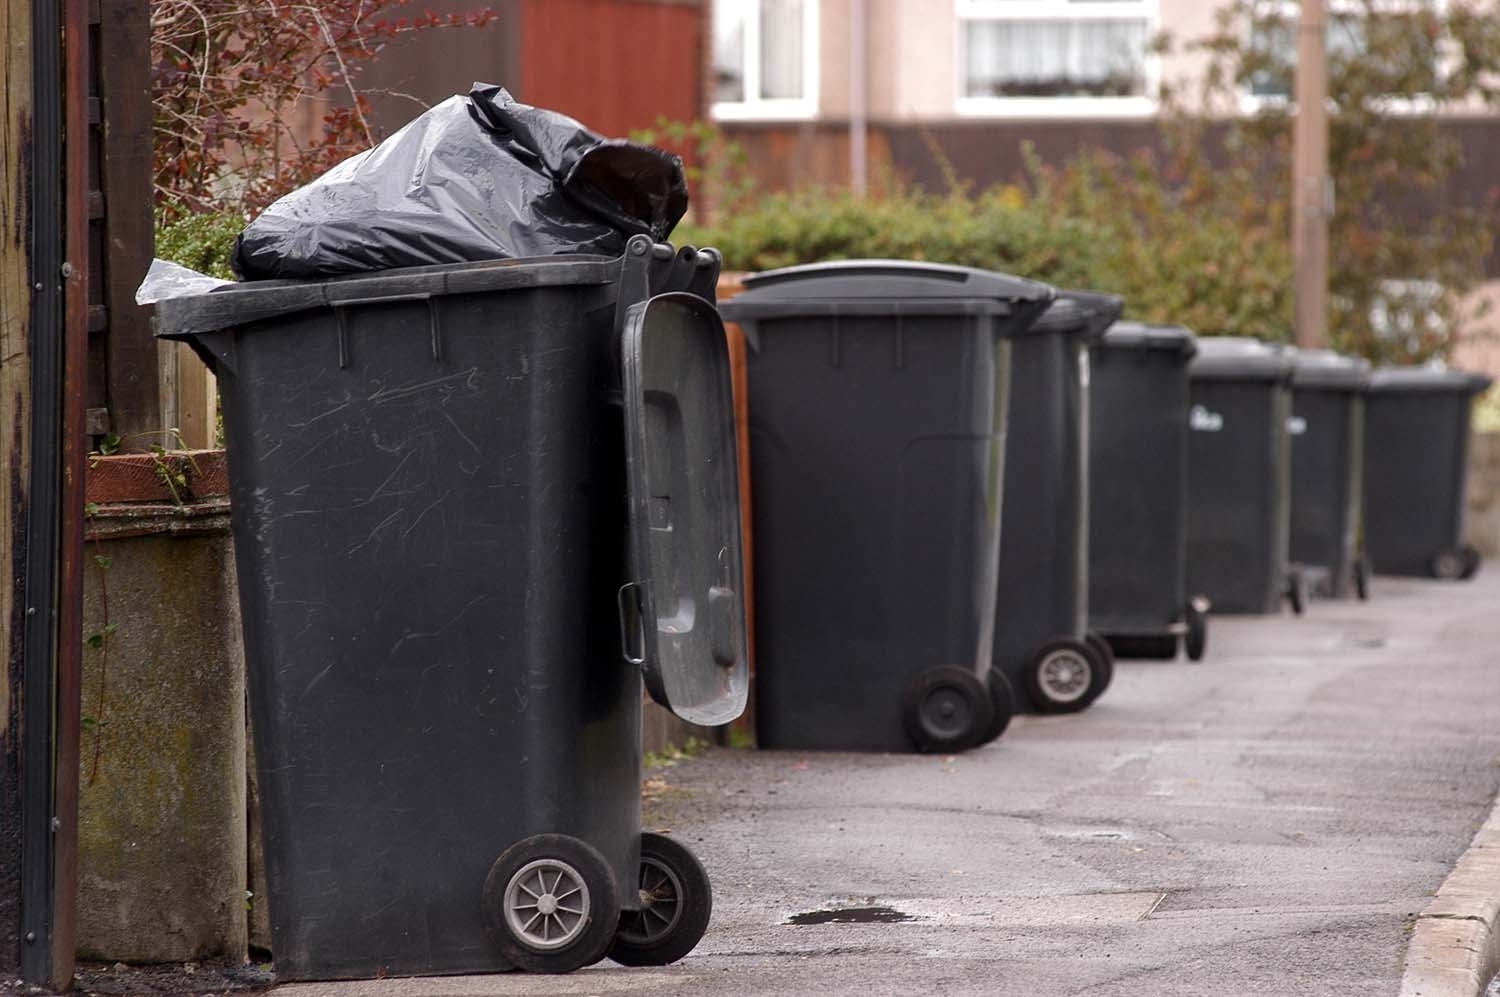 Replacing bins in Bristol has cost hundreds of thousands | Bristol Politics